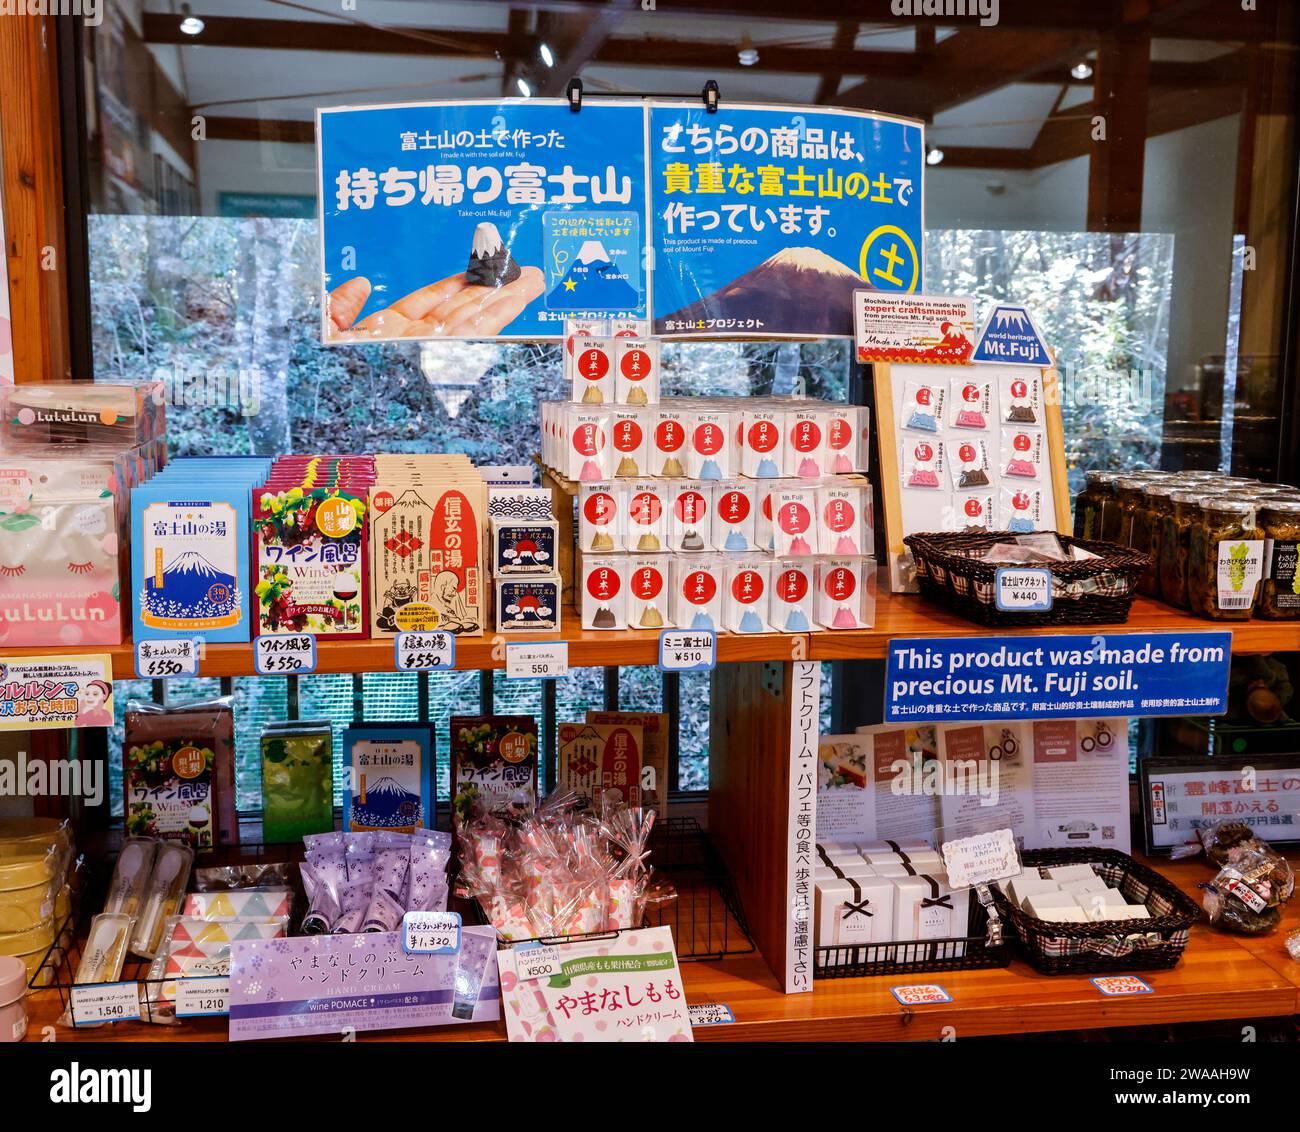 MOUNT FUJI PRODUCTS MERCHANDISING IN JAPAN Stock Photo